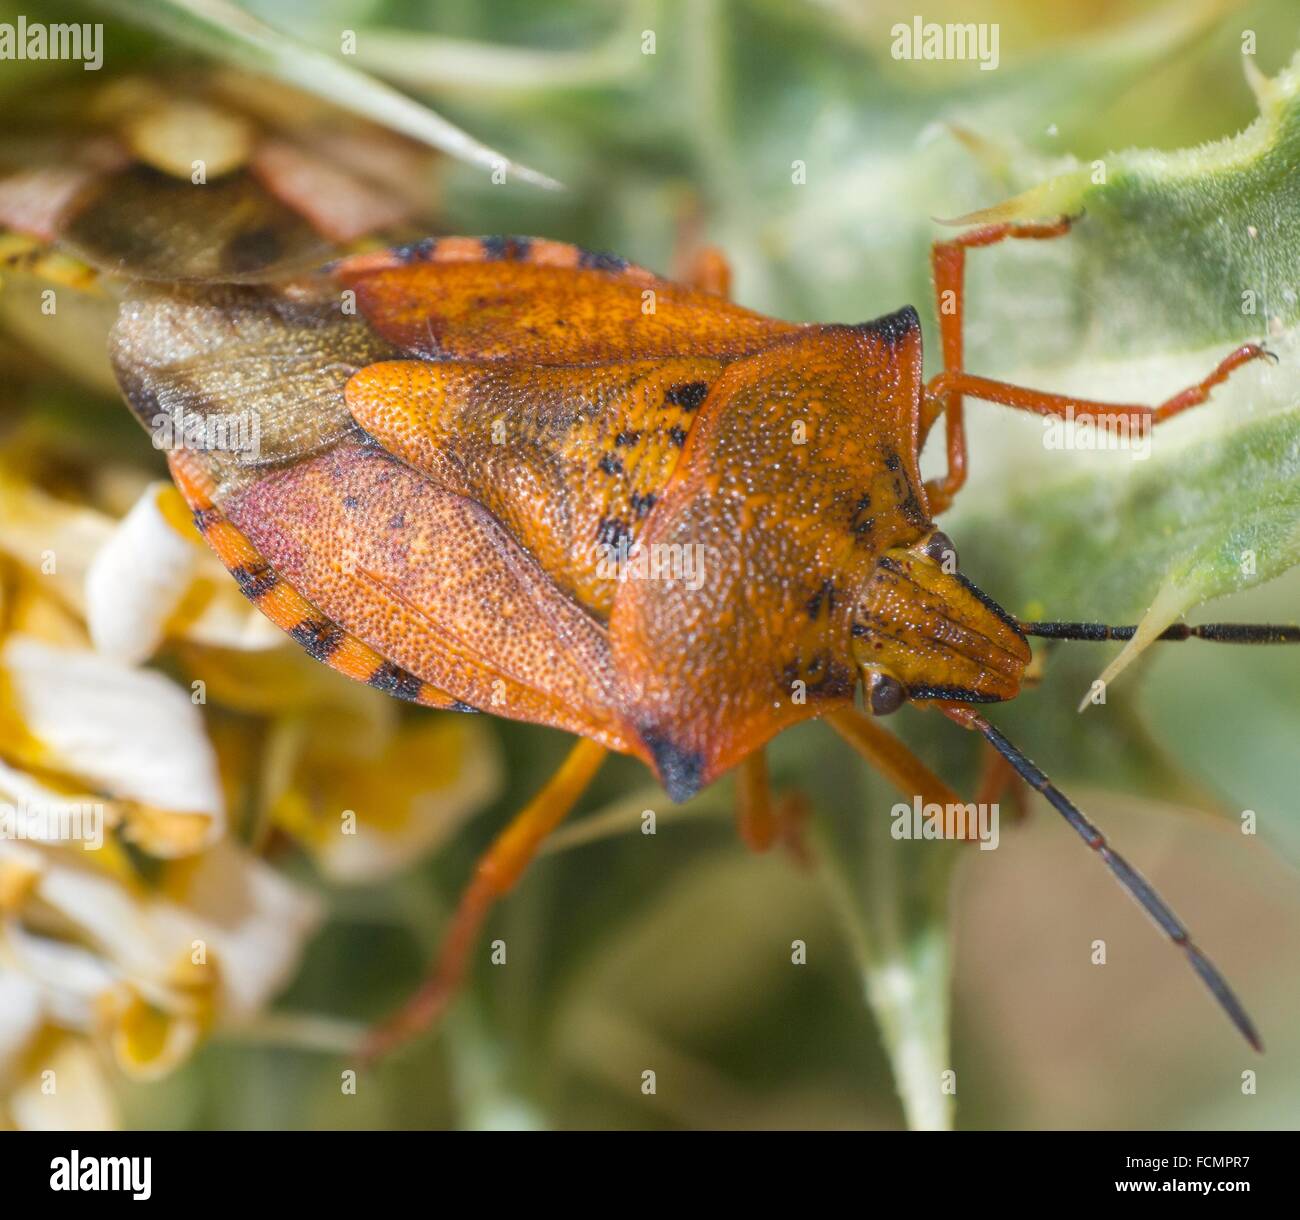 Escarabajo naranja. Coleóptero. Insecto. Artrópodo. Macrofotografía. Foto de stock